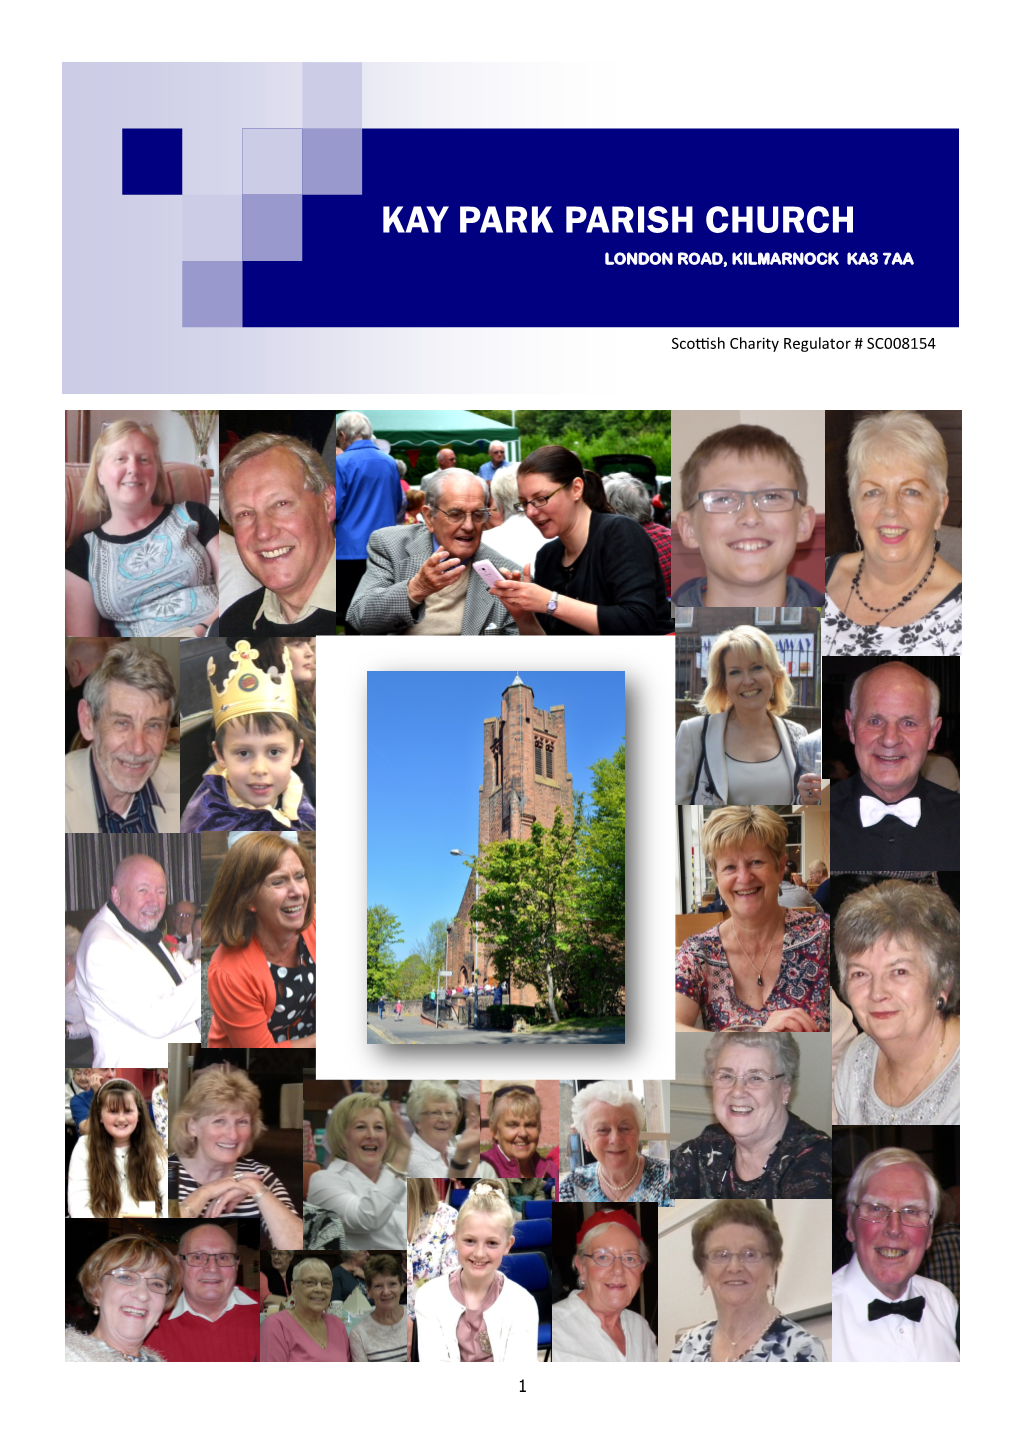 Kay Park Parish Church Aims to Meet the COS Vision By